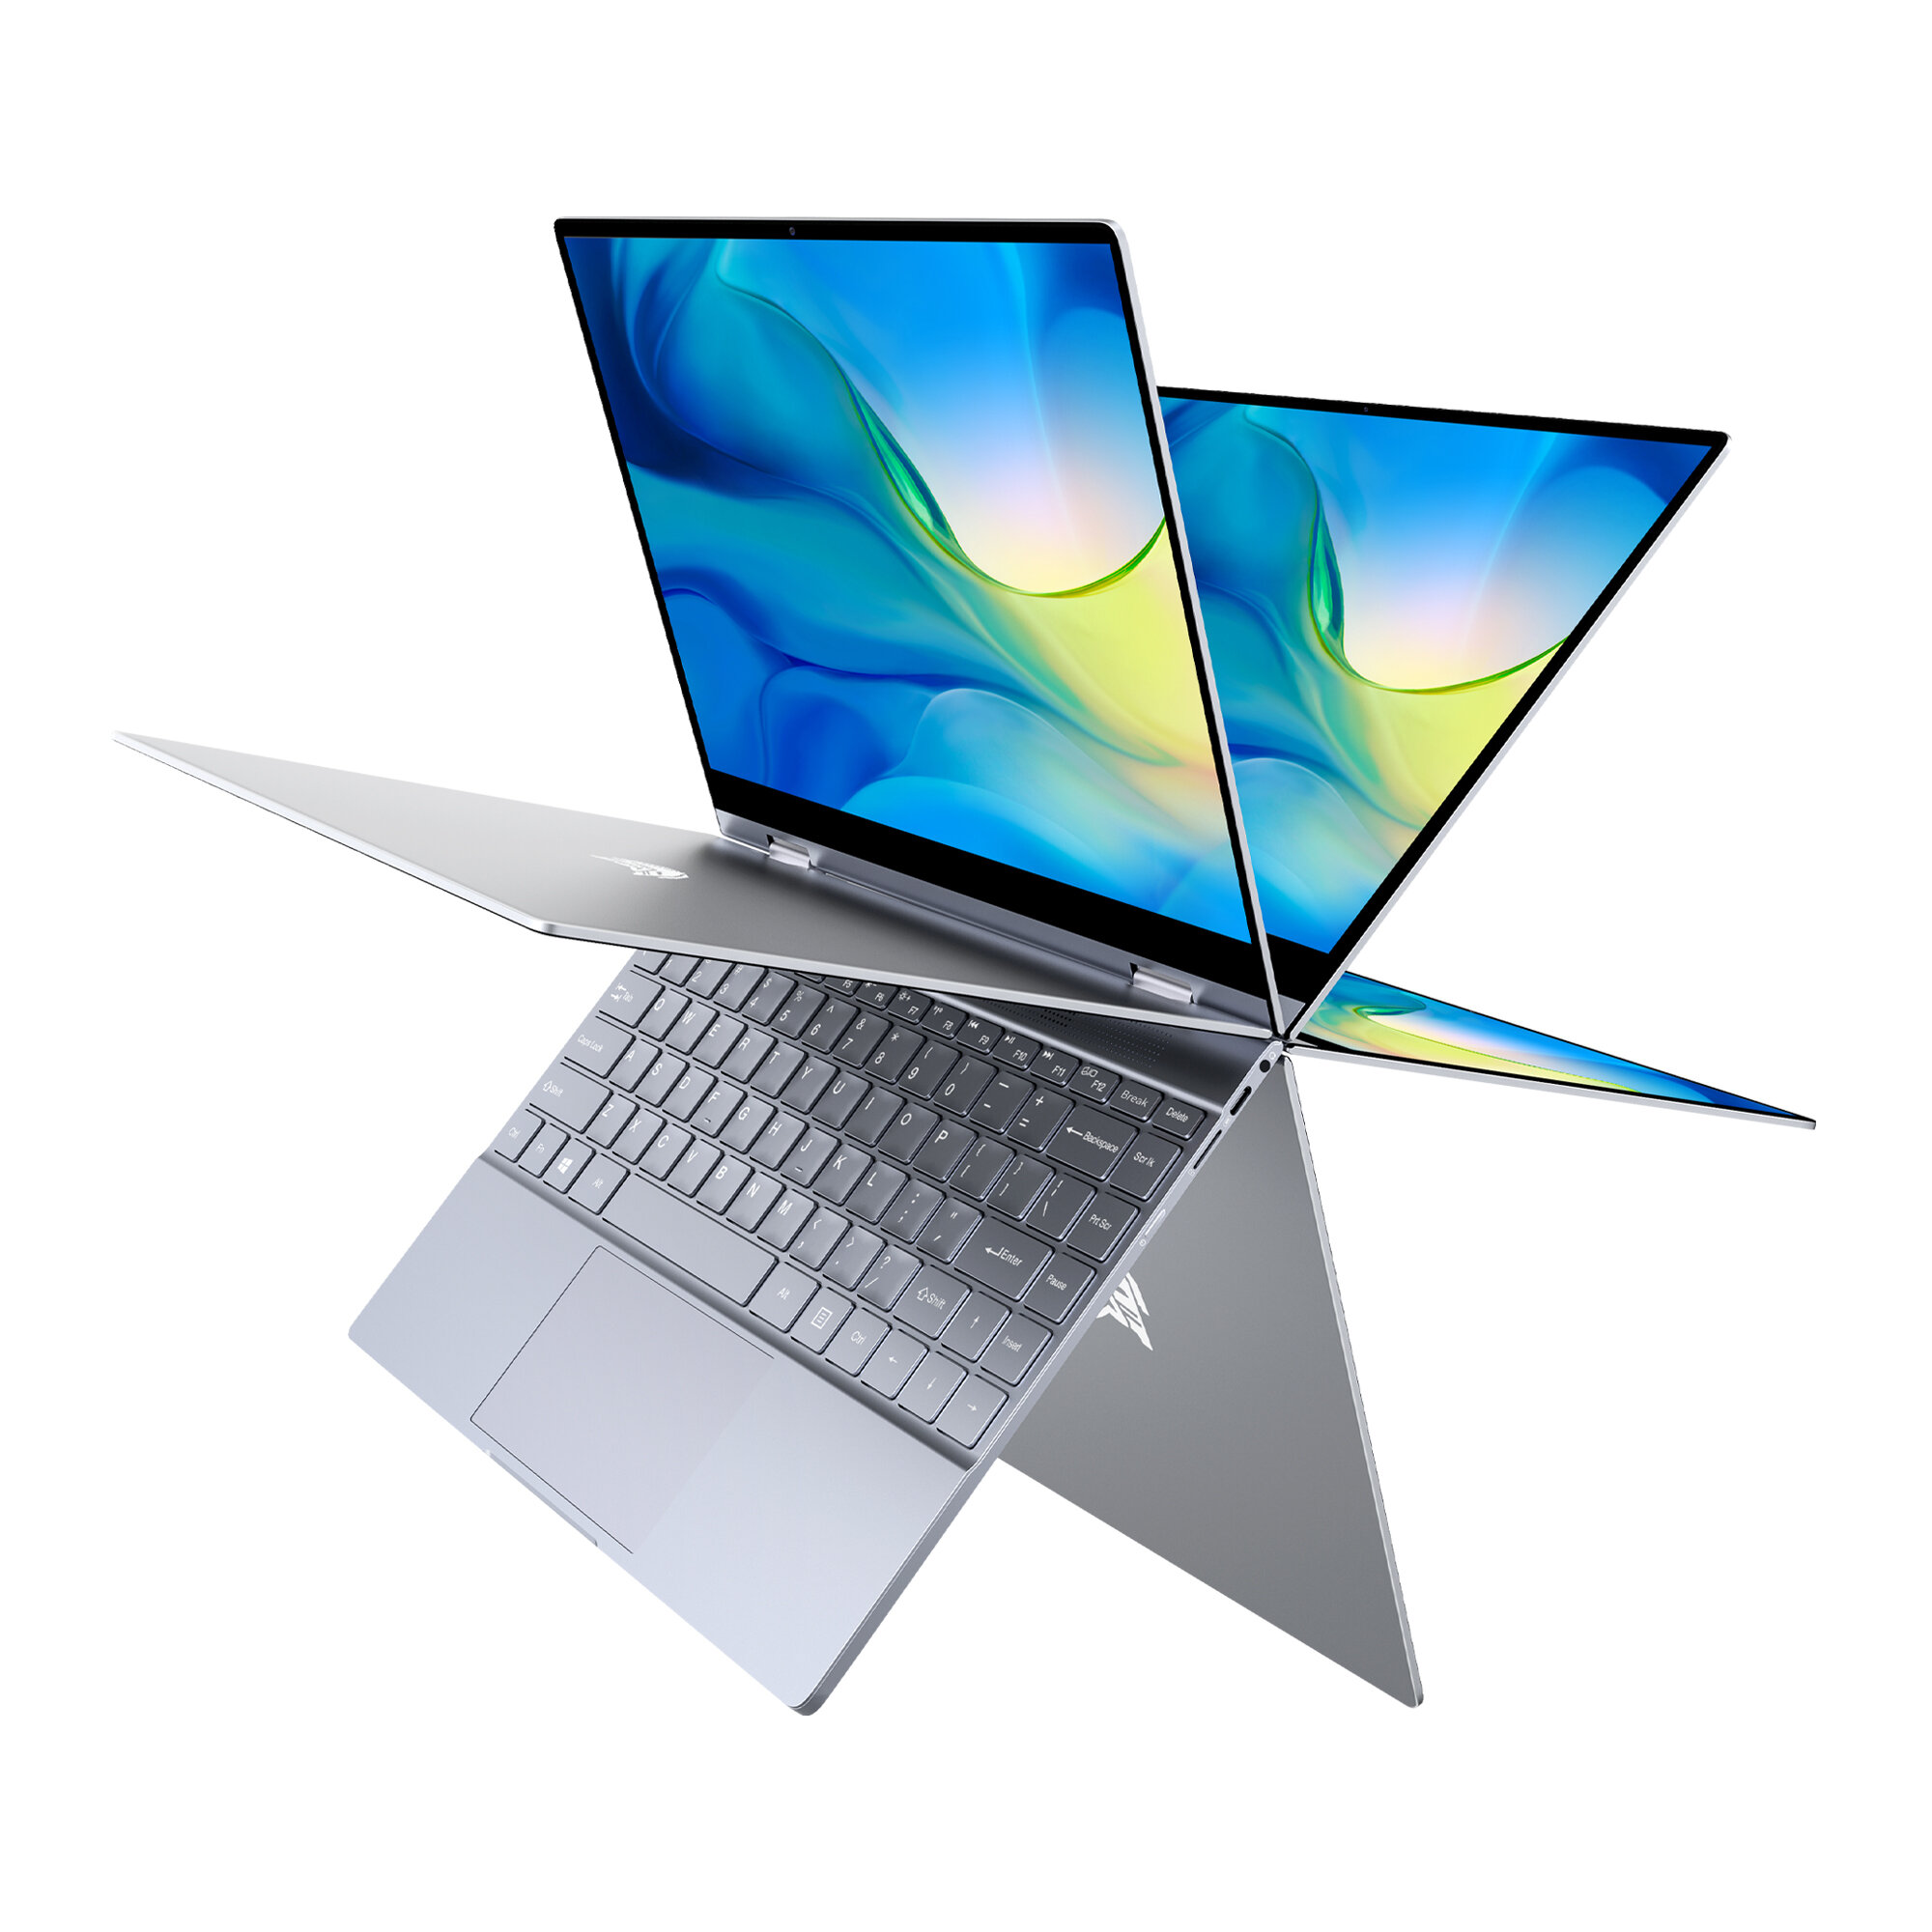 BMAX Y13 Laptop 13.3 inch 360－degree Touchscreen Intel N4120 8GB 256GB SSD 5mm Narrow Bezel Backlight Notebook